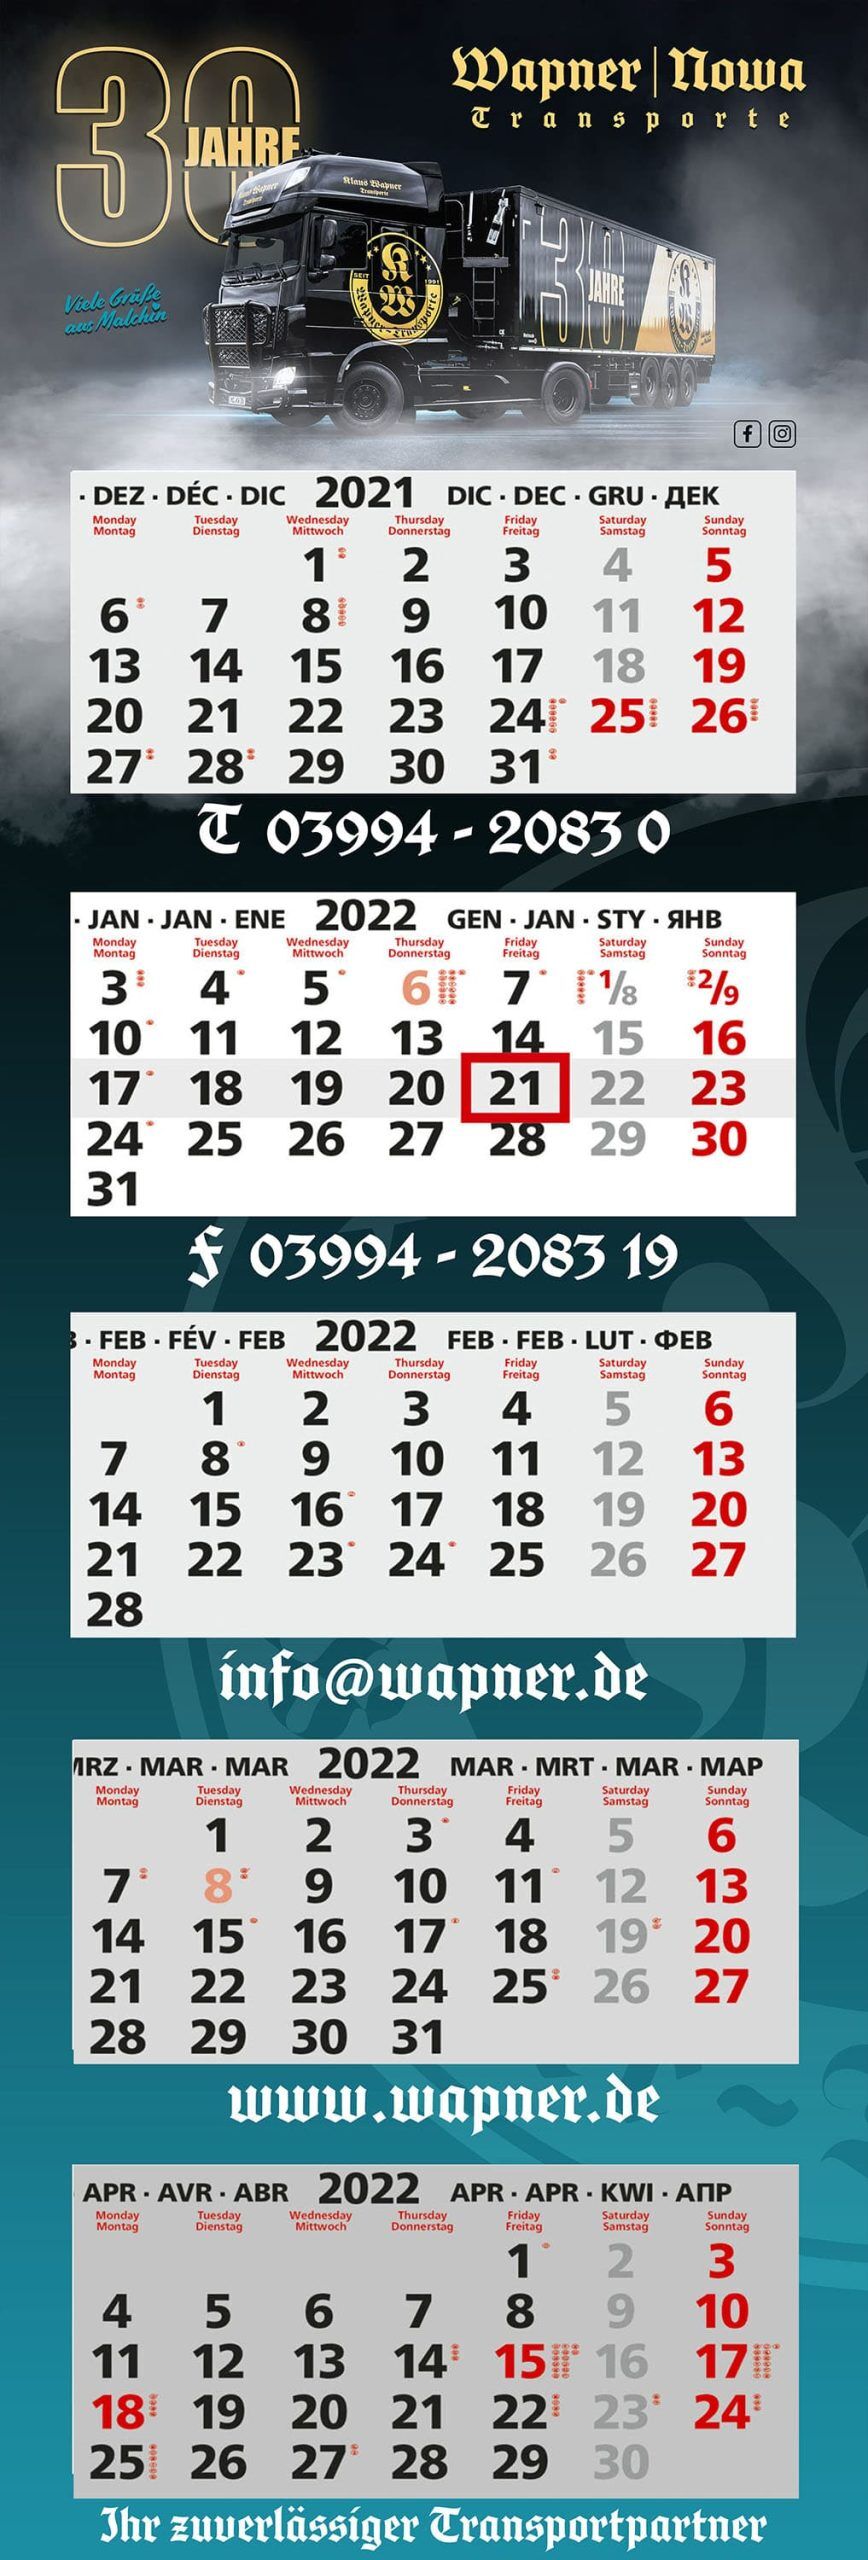 Wapner Transporte Kalender